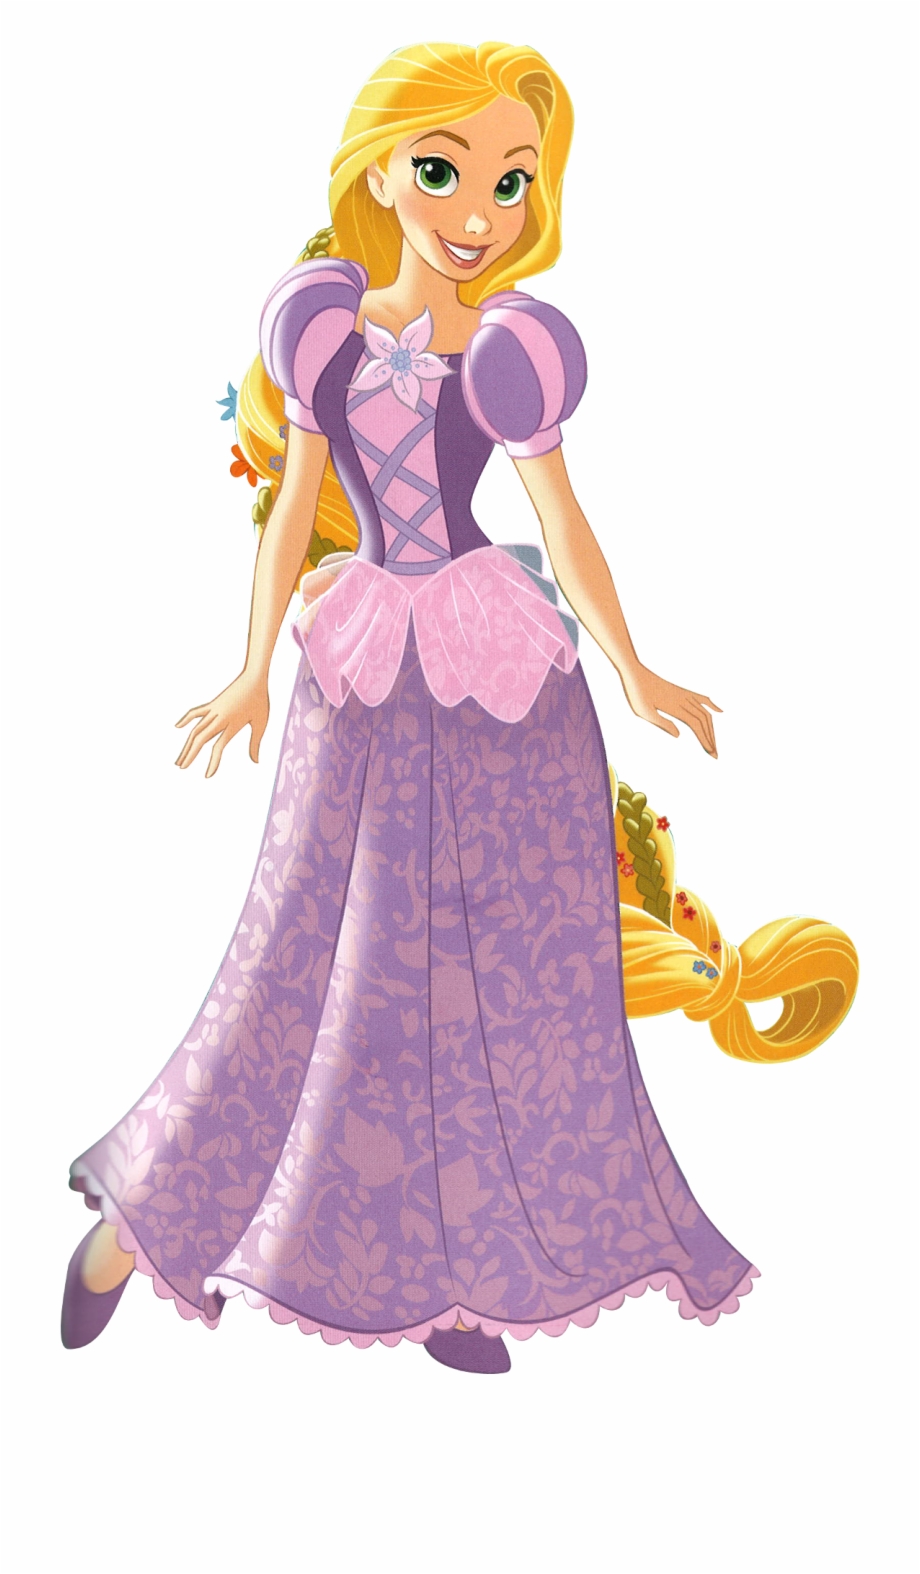 Disney princess images.